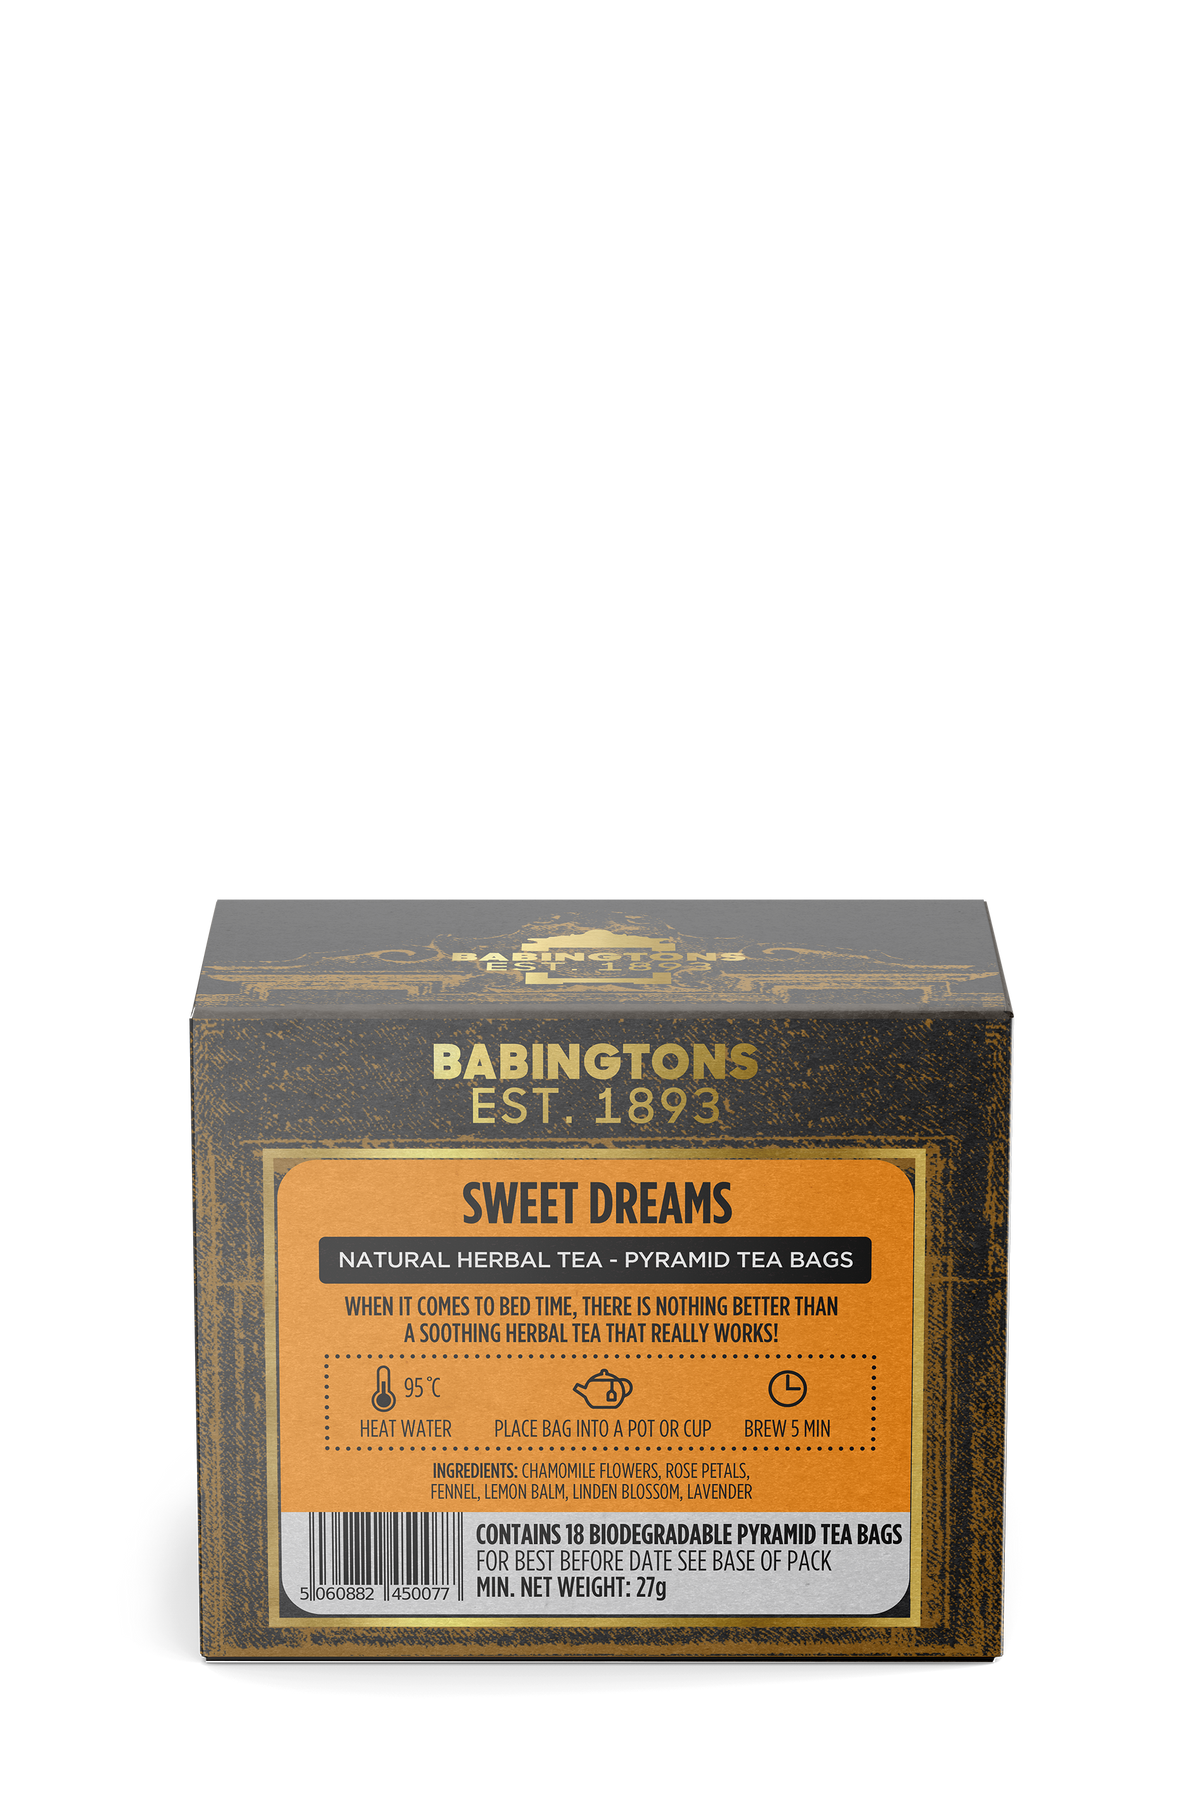 Sweet Dreams - Box: Tea bags